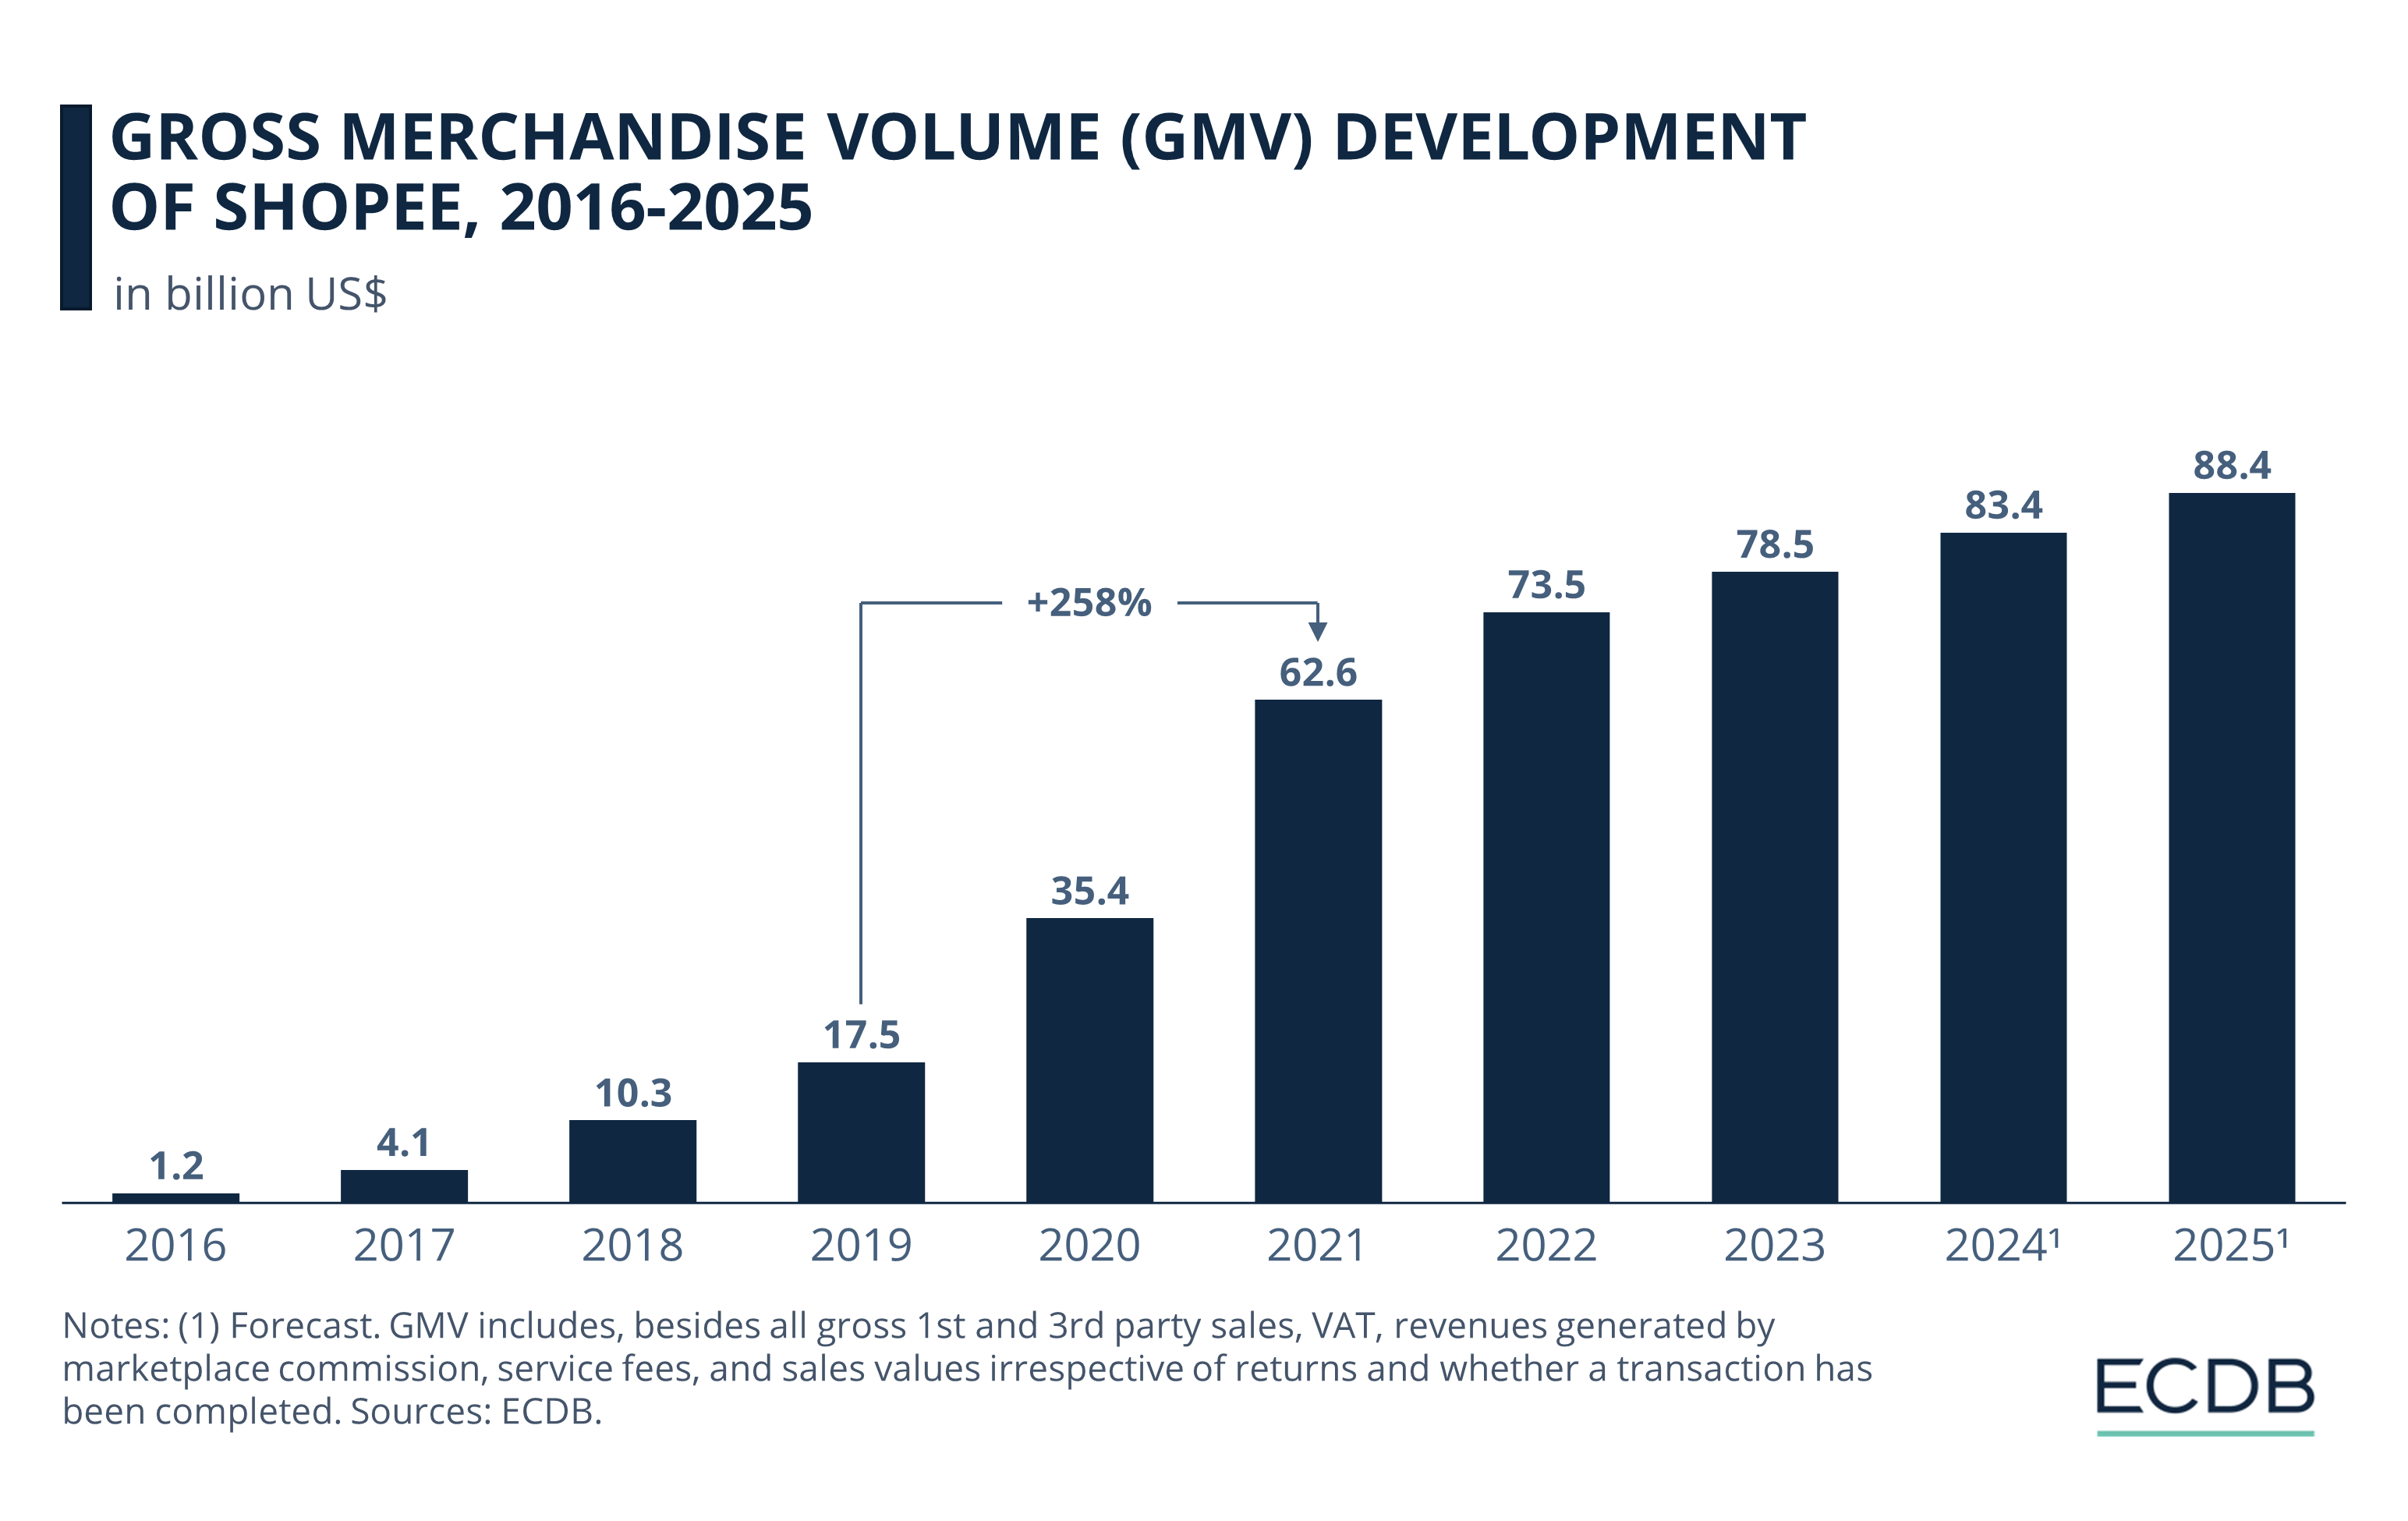 Gross Merchandise Volume (GMV) Development of Shopee, 2016-2025